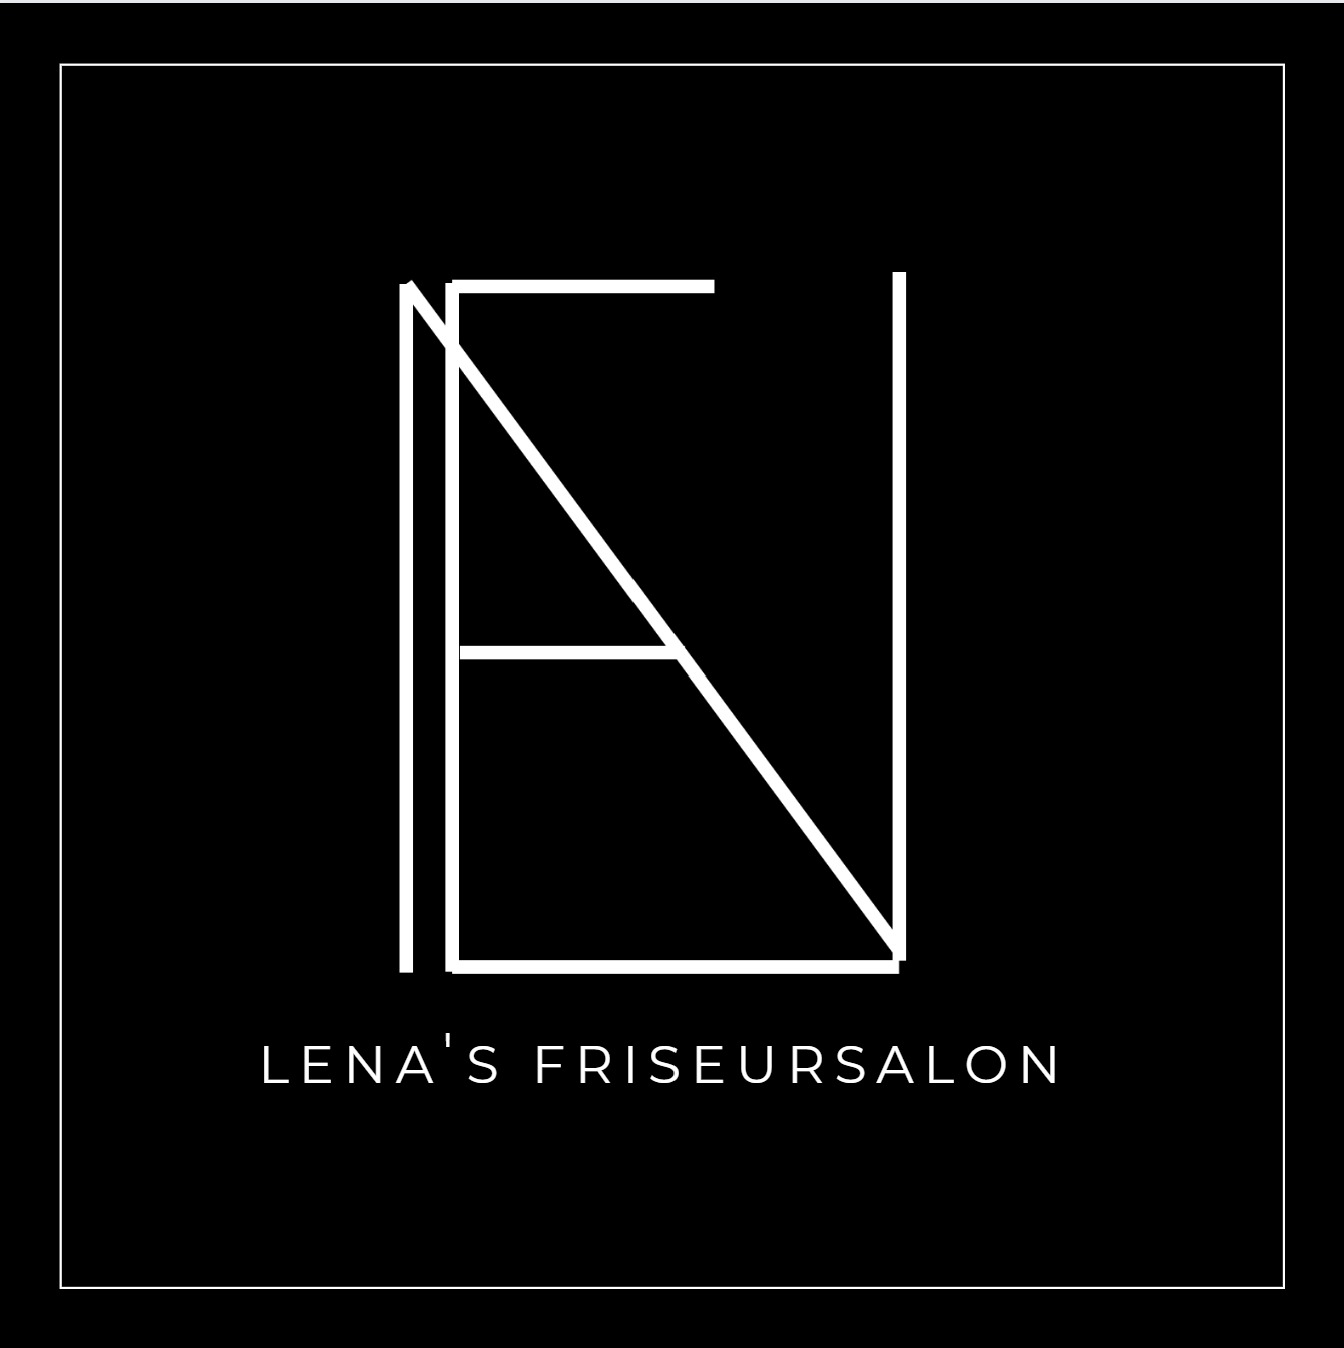 Lena's Friseursalon